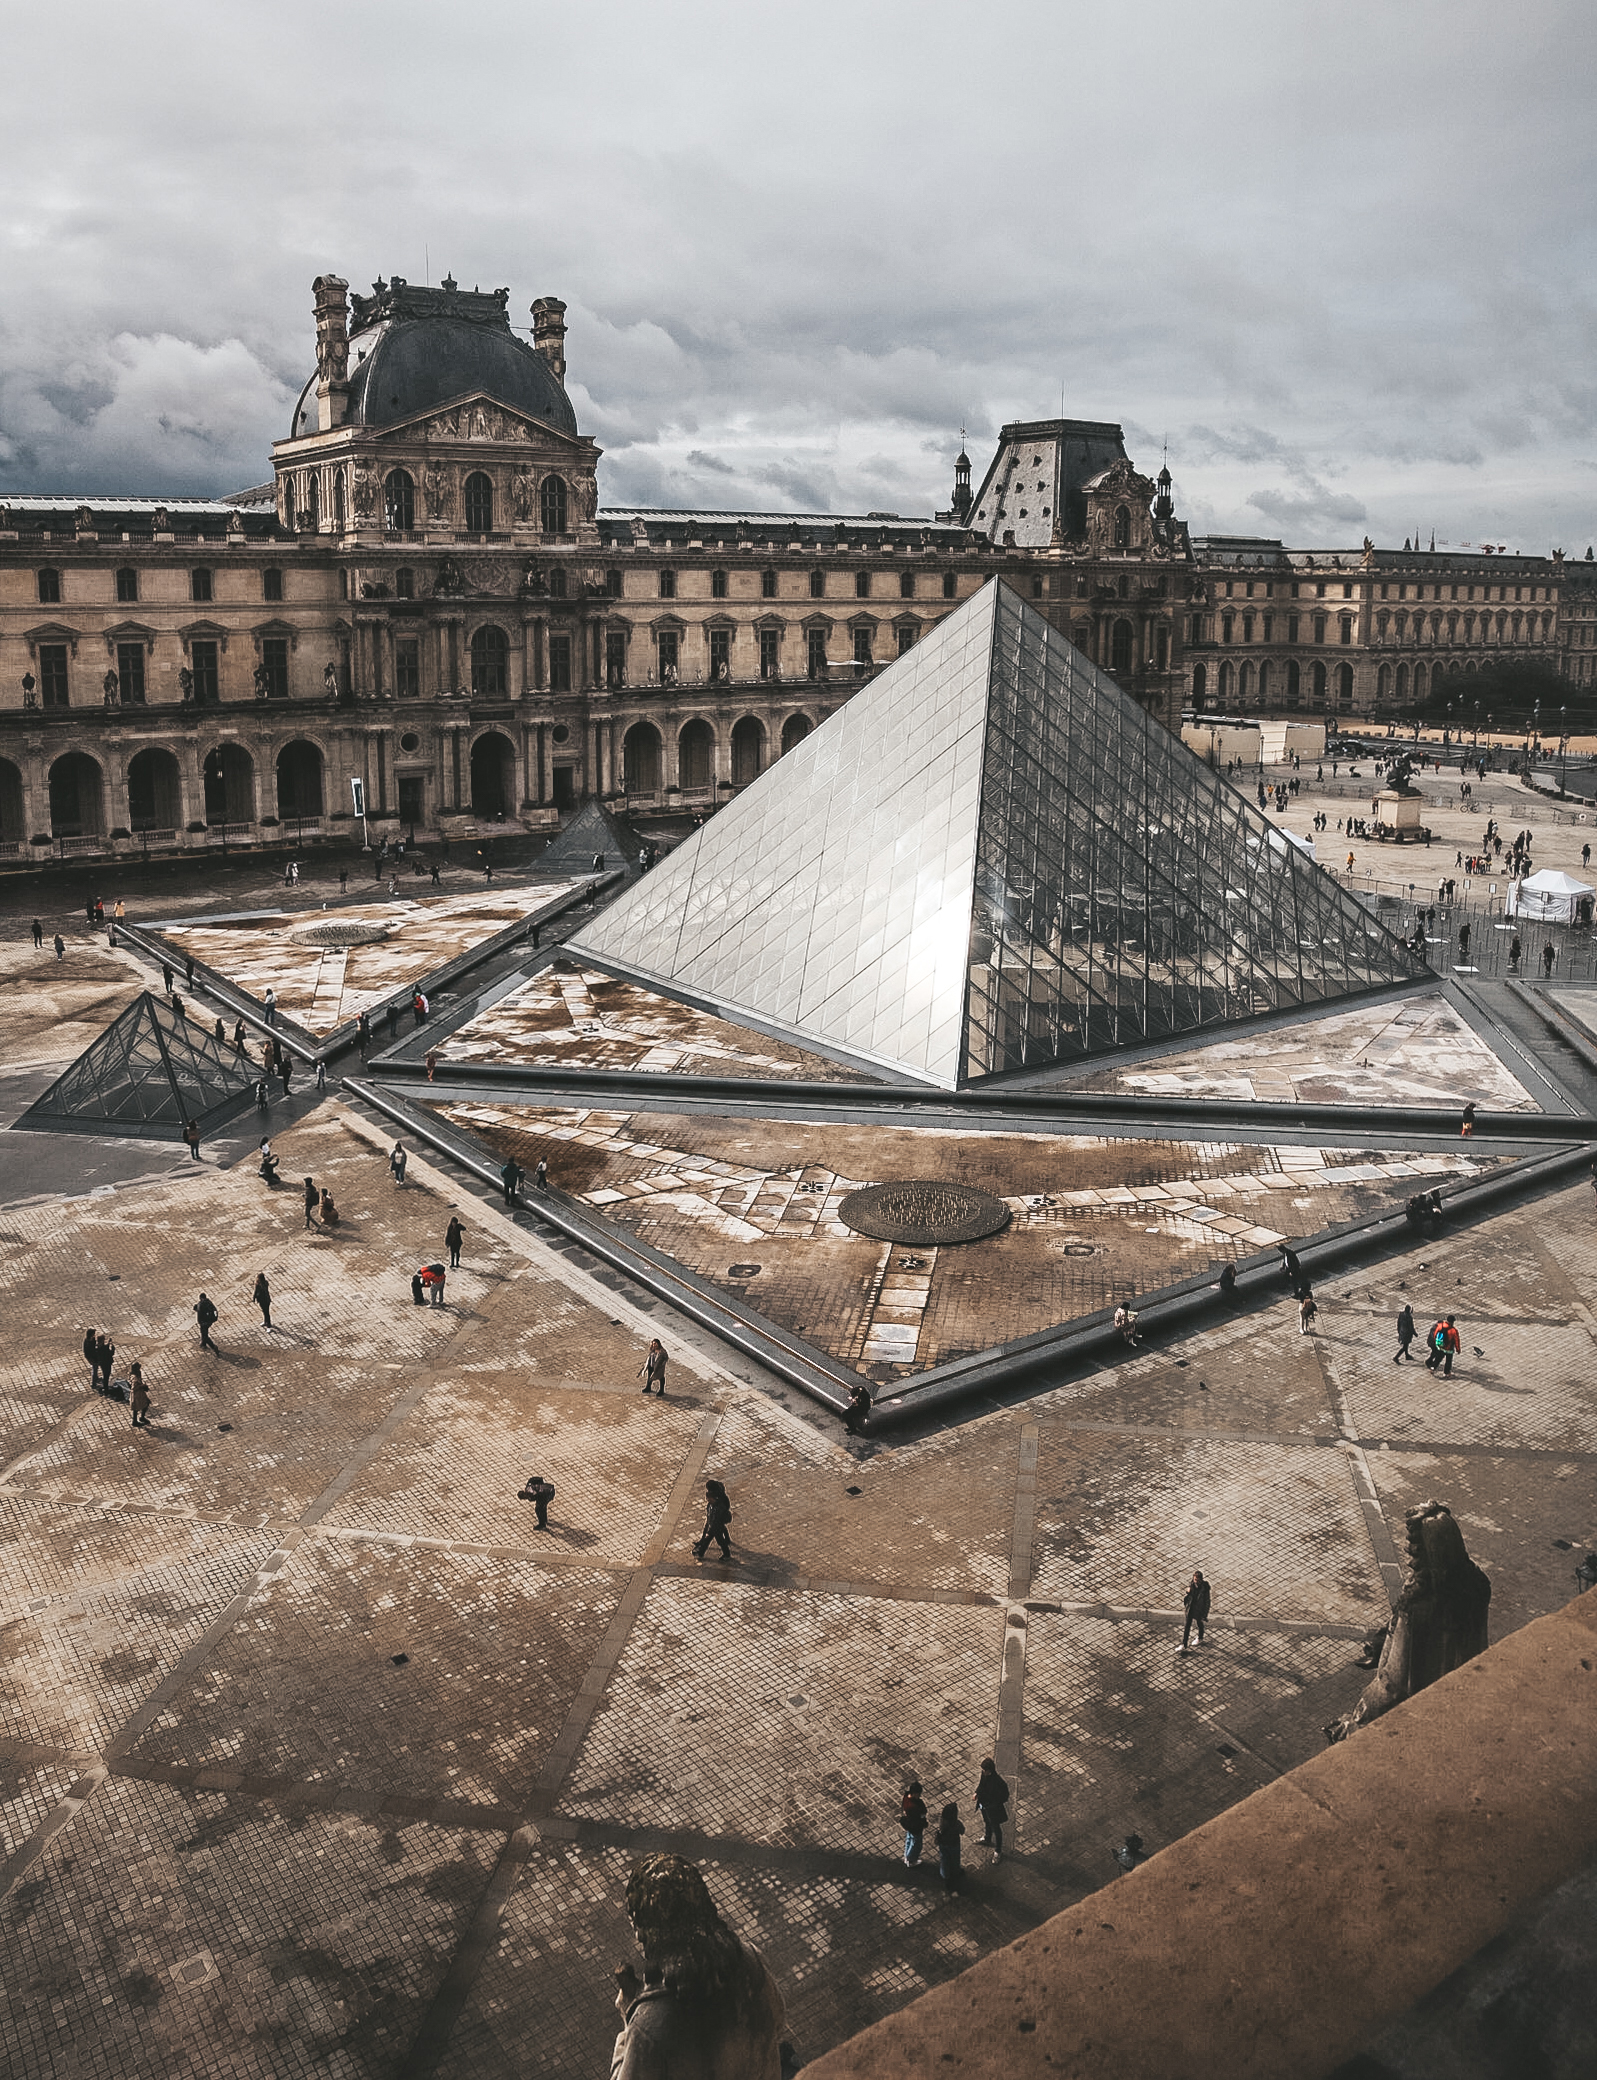 Museum Louvre 
© Marielle Janotta - My Travel Island